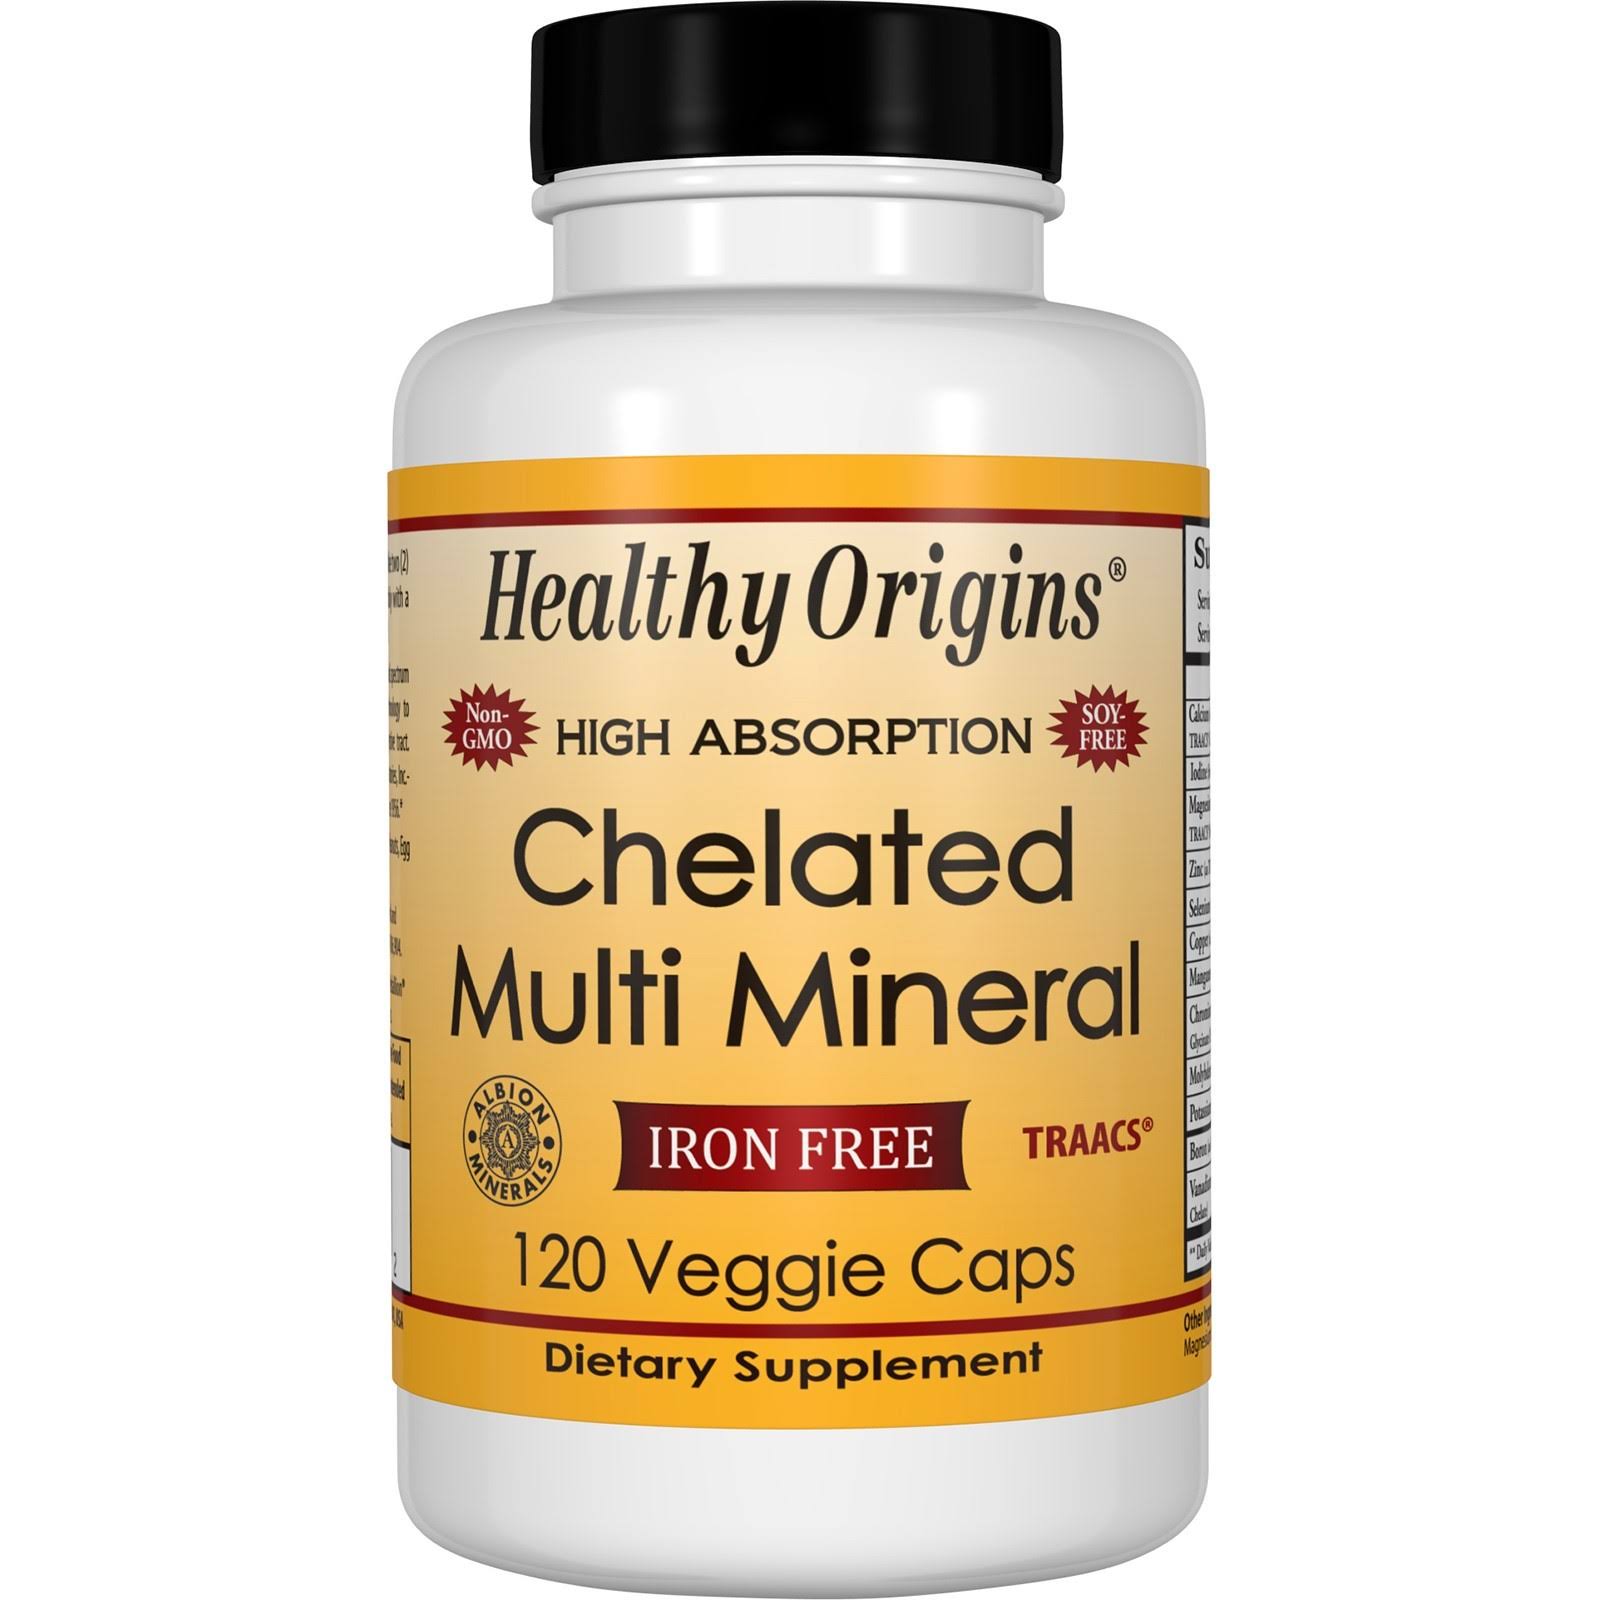 Healthy Origins Chelated Multi Mineral Iron Free 120 Veggie Caps